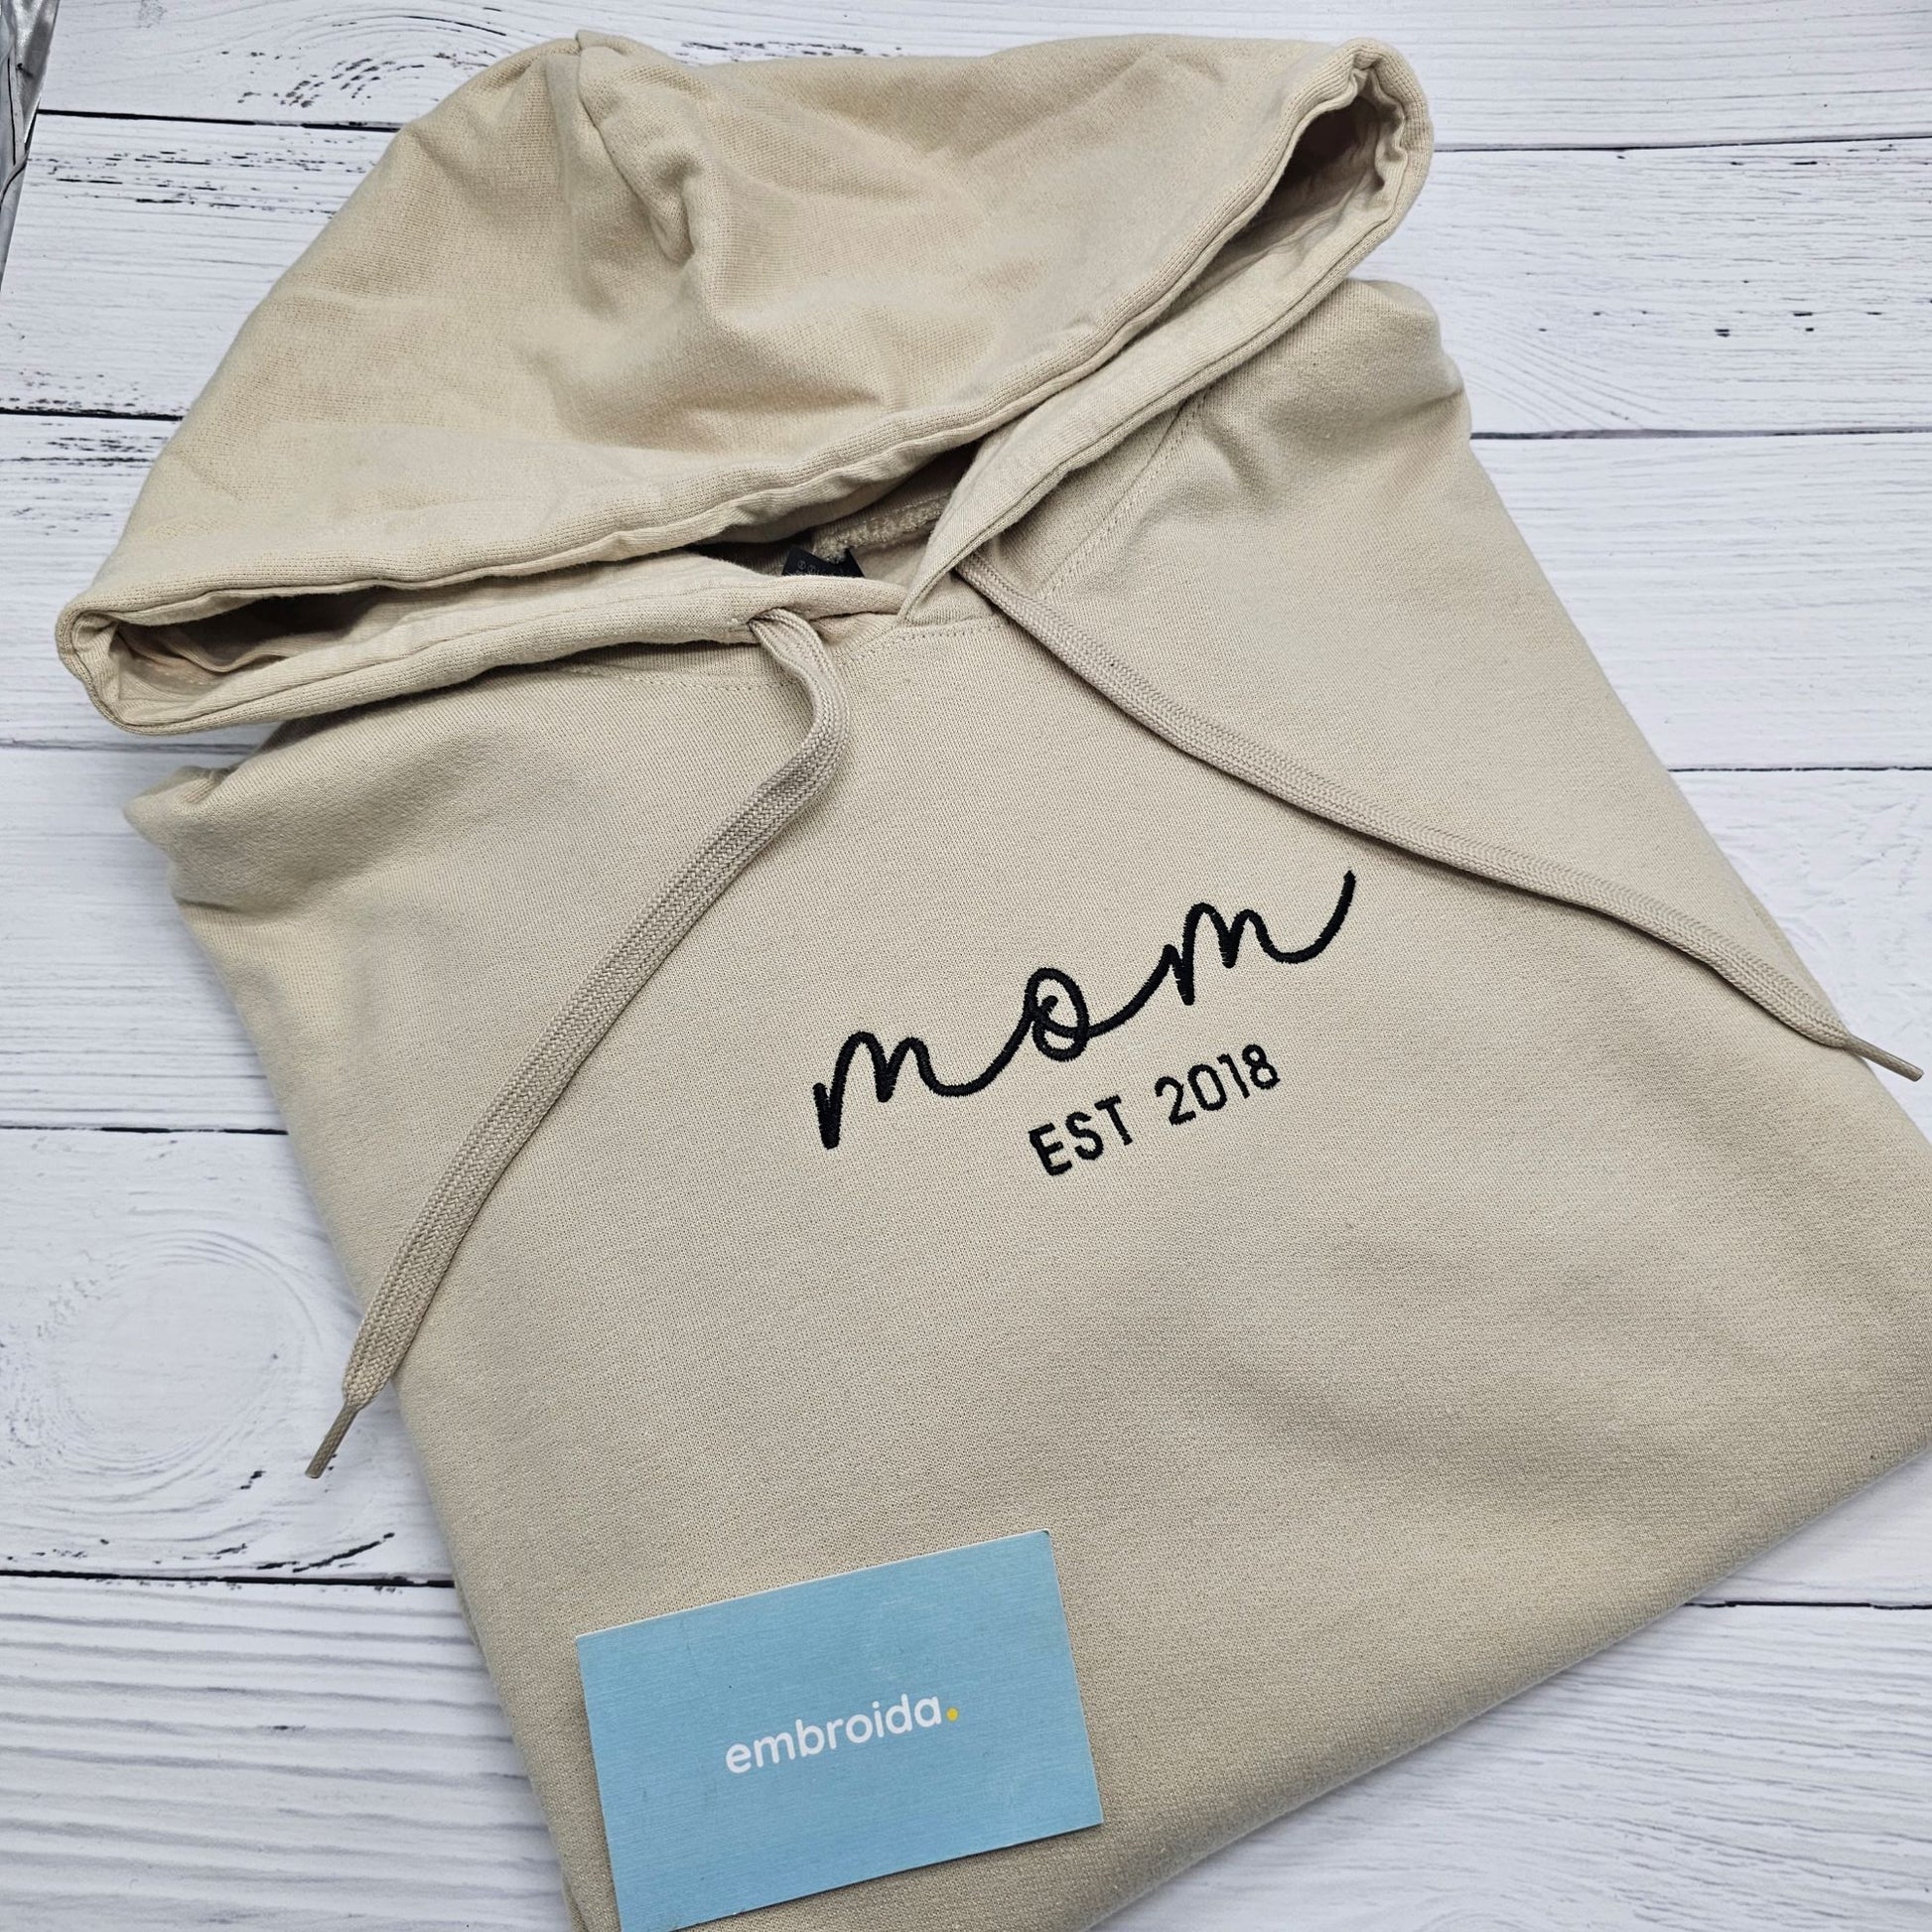 MAMA hoodie jumper est cursive writing sand beige colour